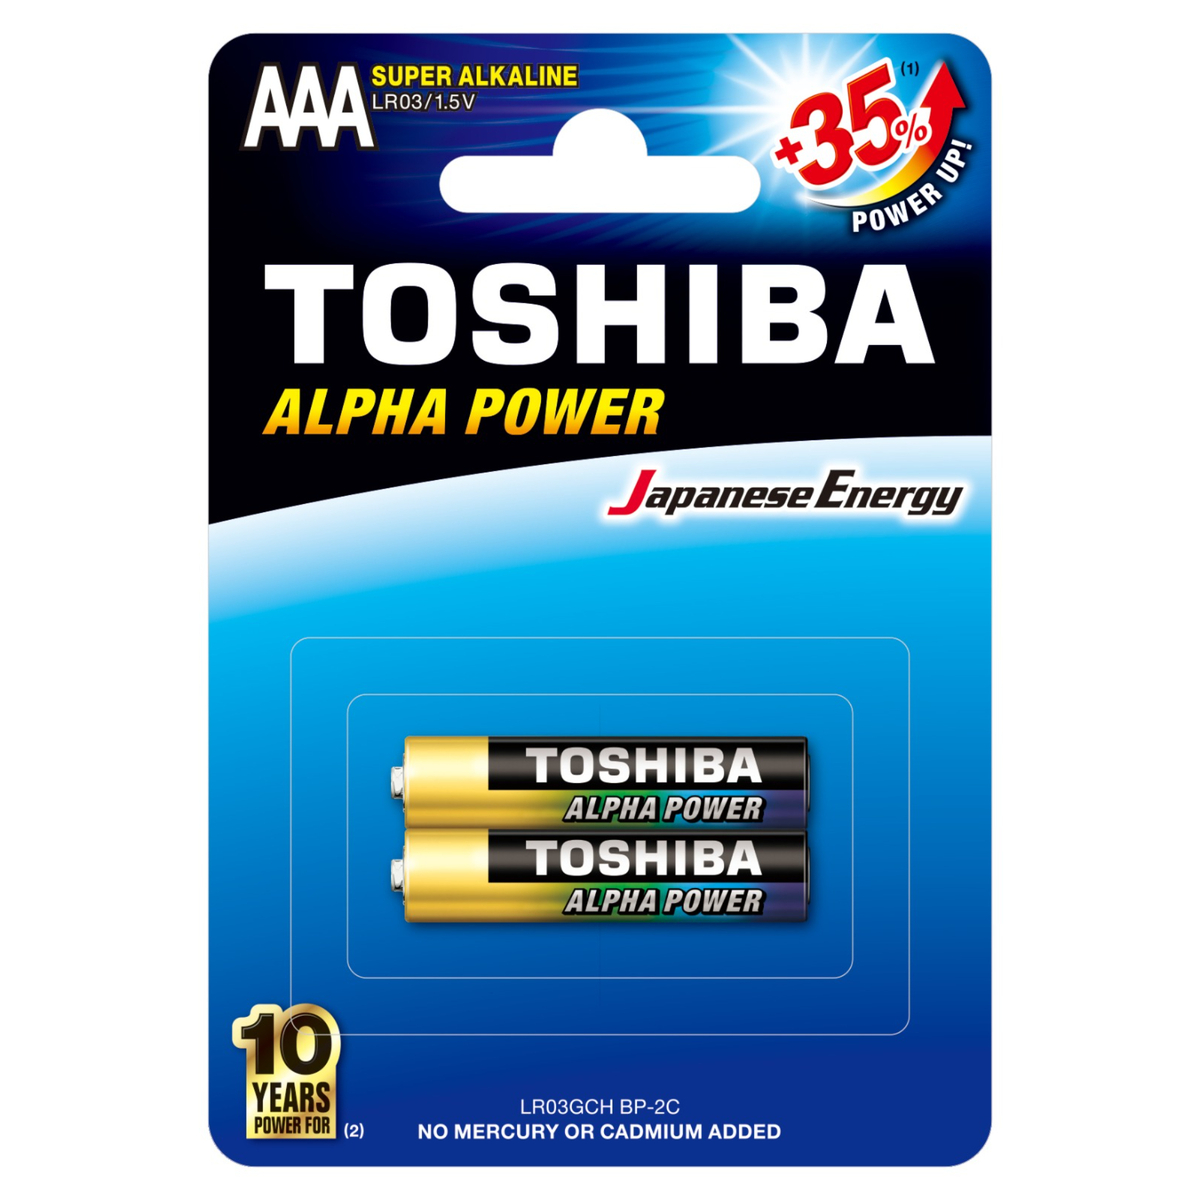 Toshiba Alpha Power Alkaline AAA Battery, 1.5V x 2 Pcs, LR03